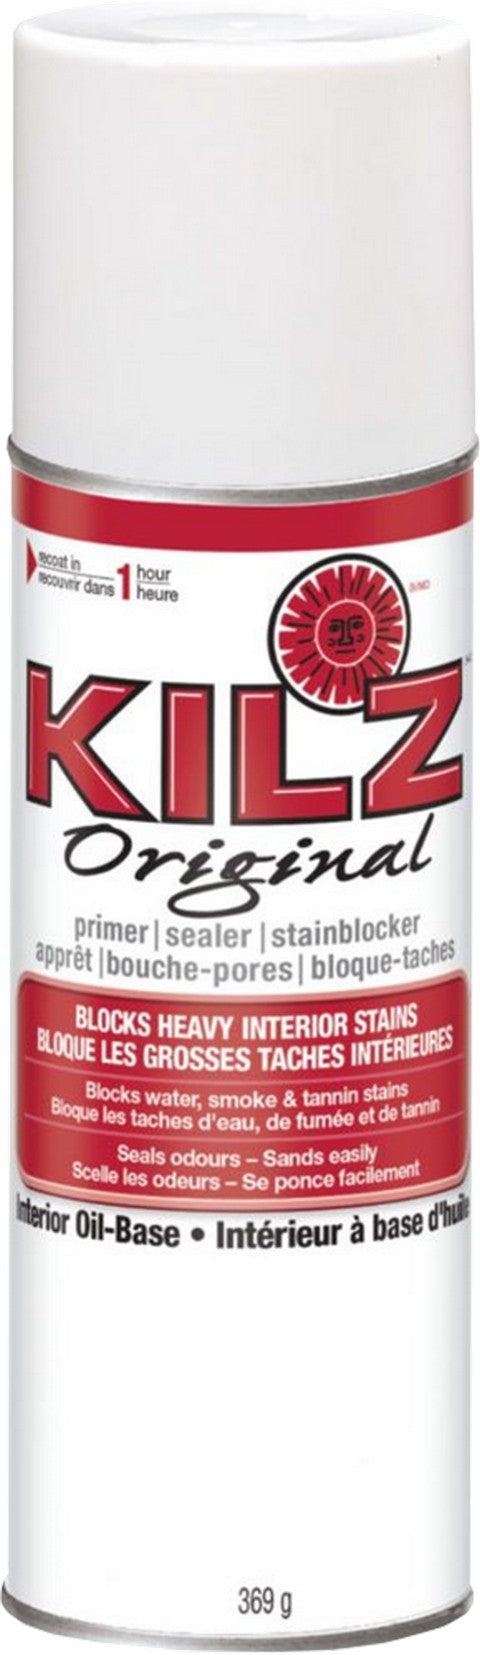 Kilz 10004C 369g (13 oz.) Original Int Primer Sealer Spray